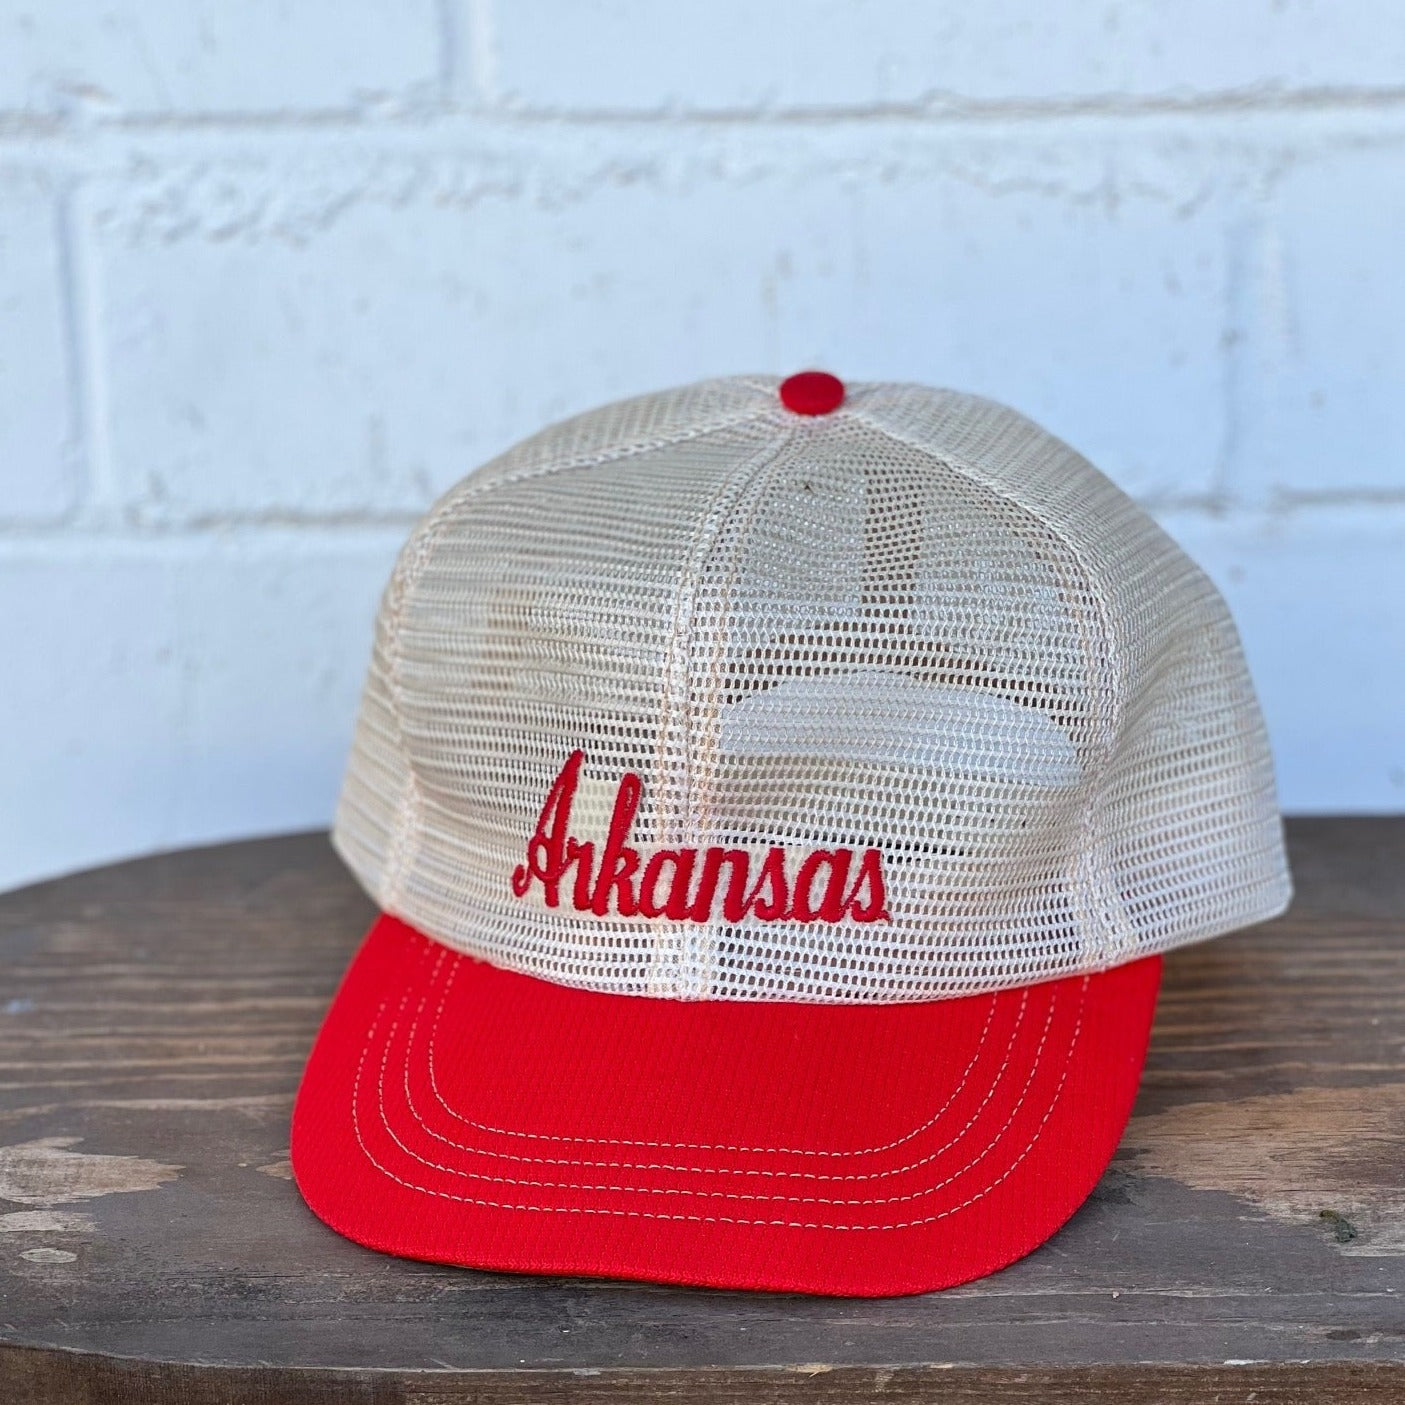 Vintage 1970s Arkansas Trucker Hat